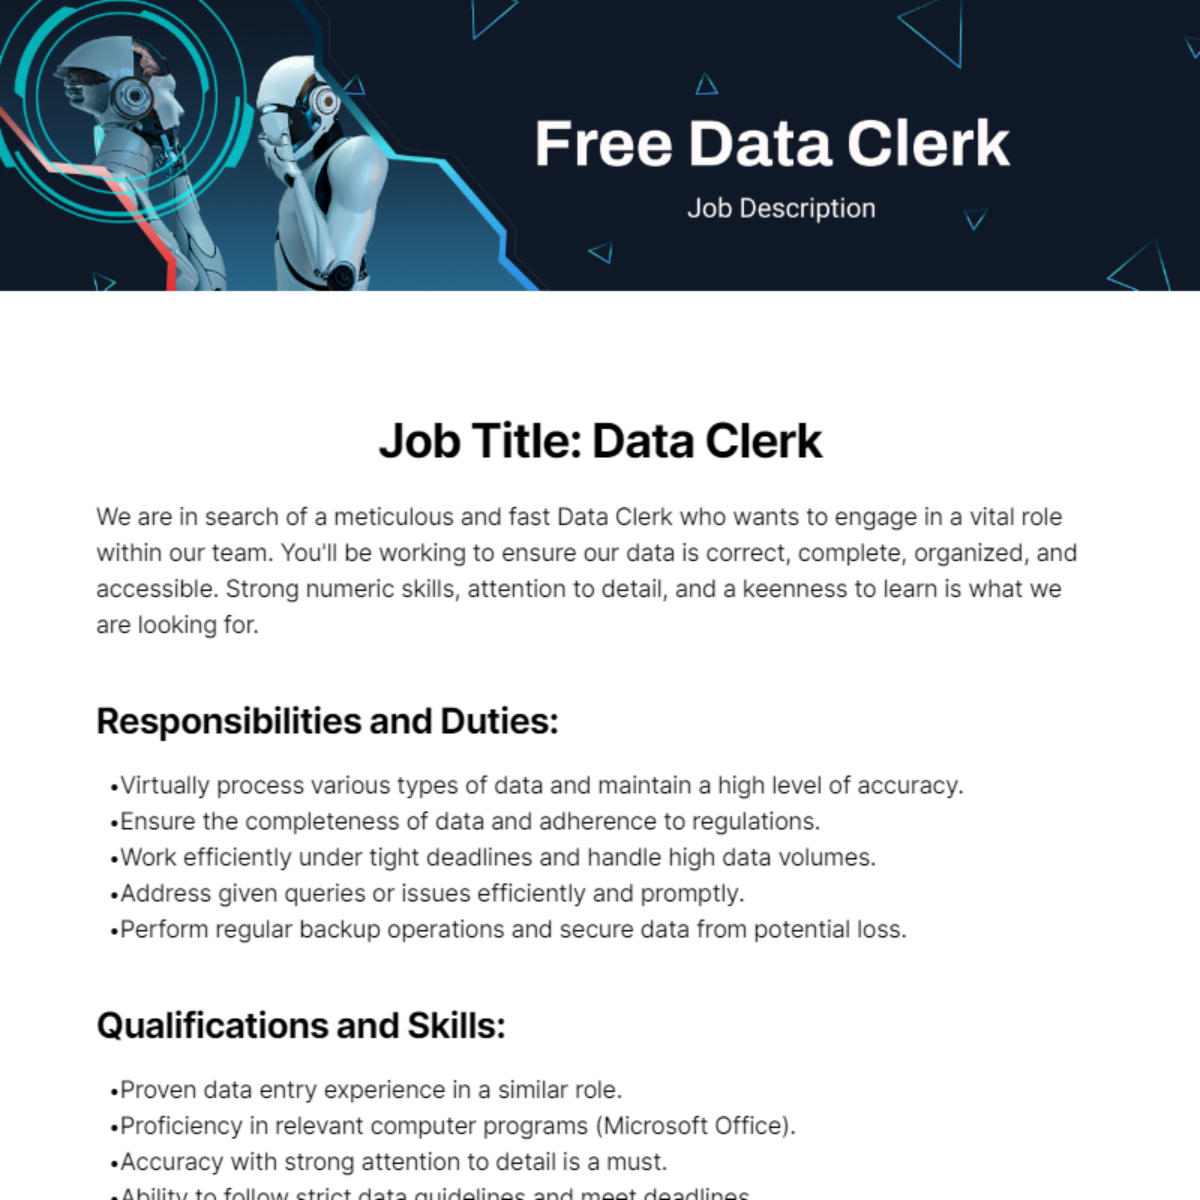 Free Data Clerk Job Description Template